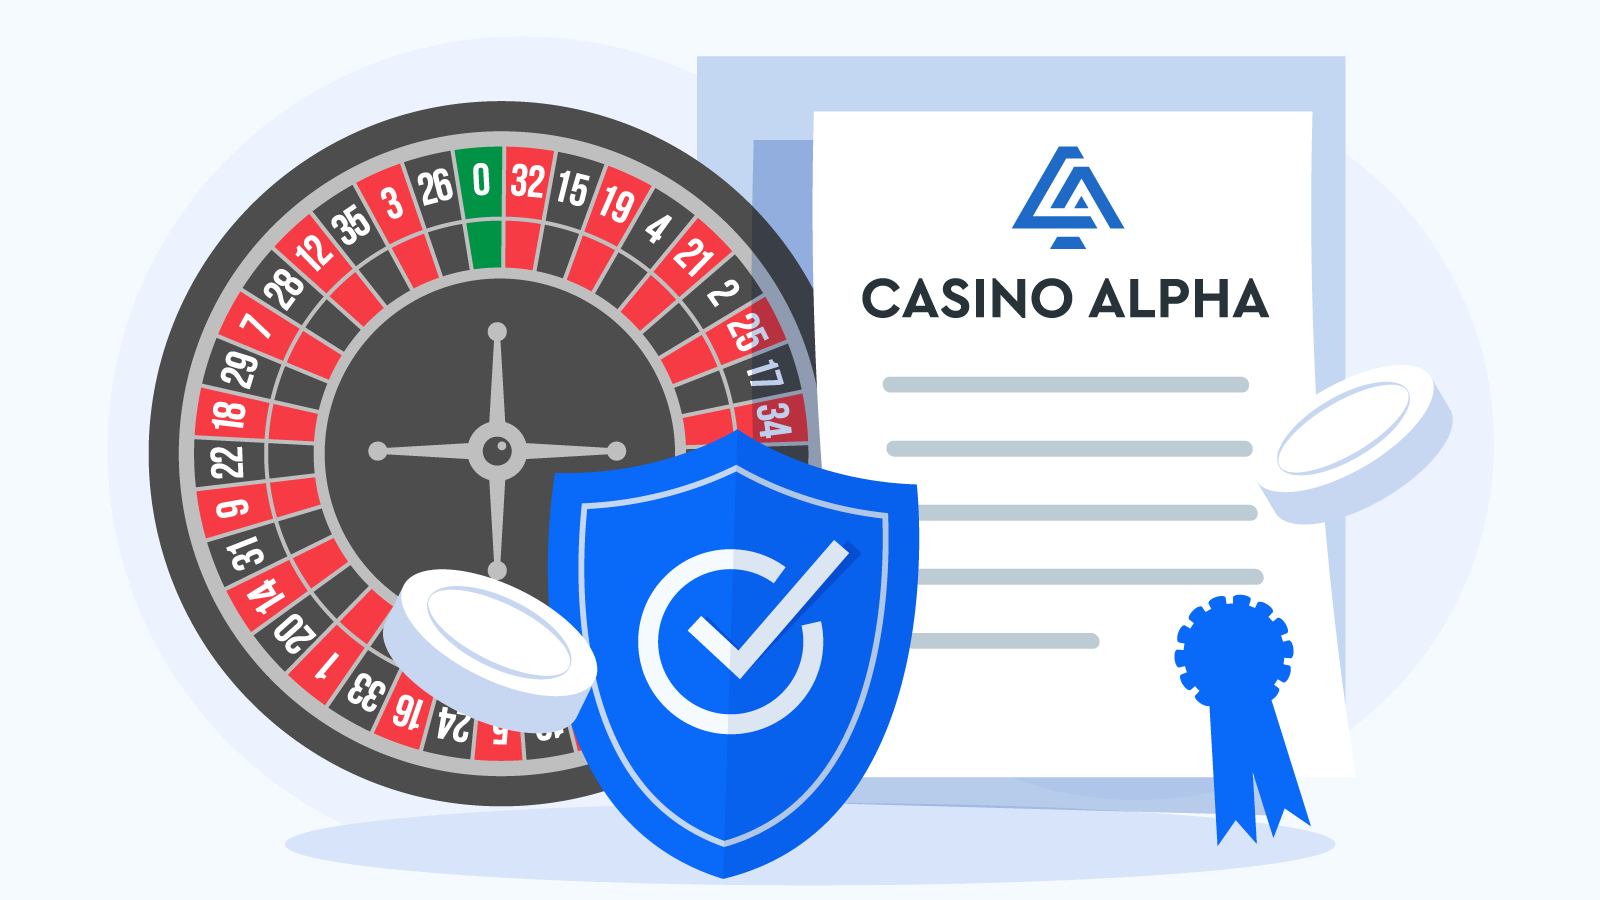 CasinoAlpha’s steps to en sure fair gambling sessions